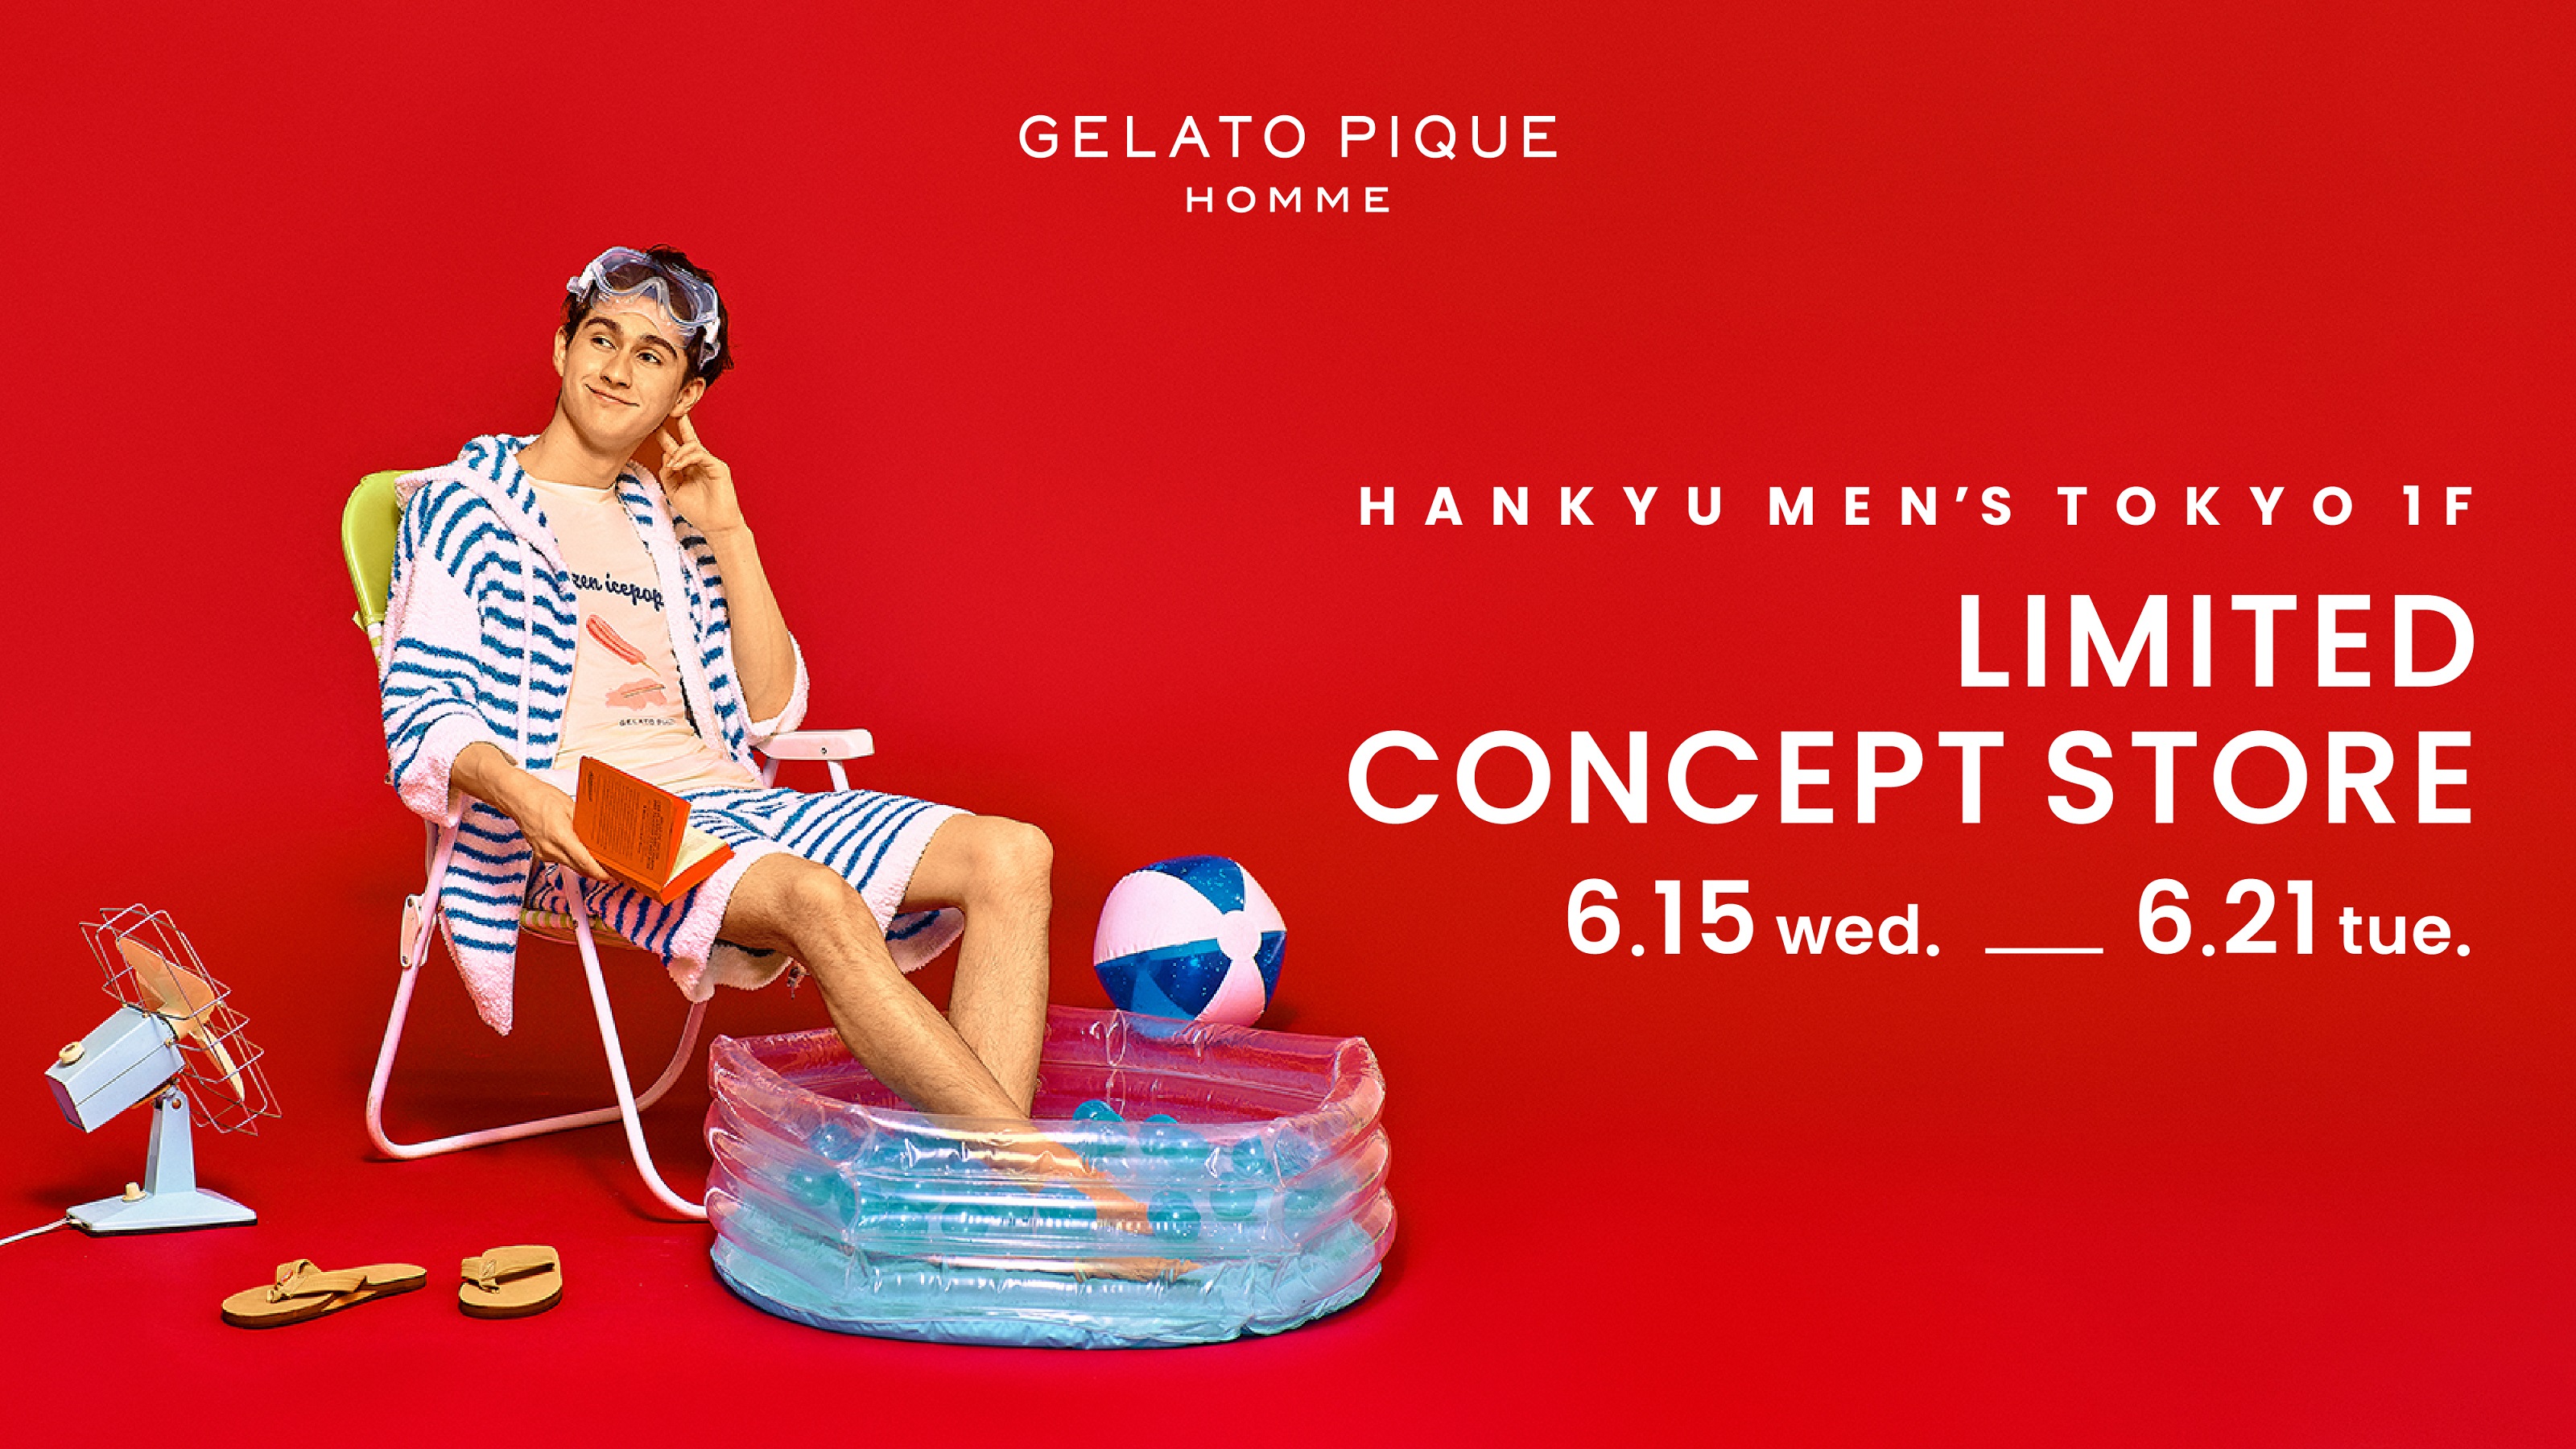 gelato-pique-homme-limited-concept-store1